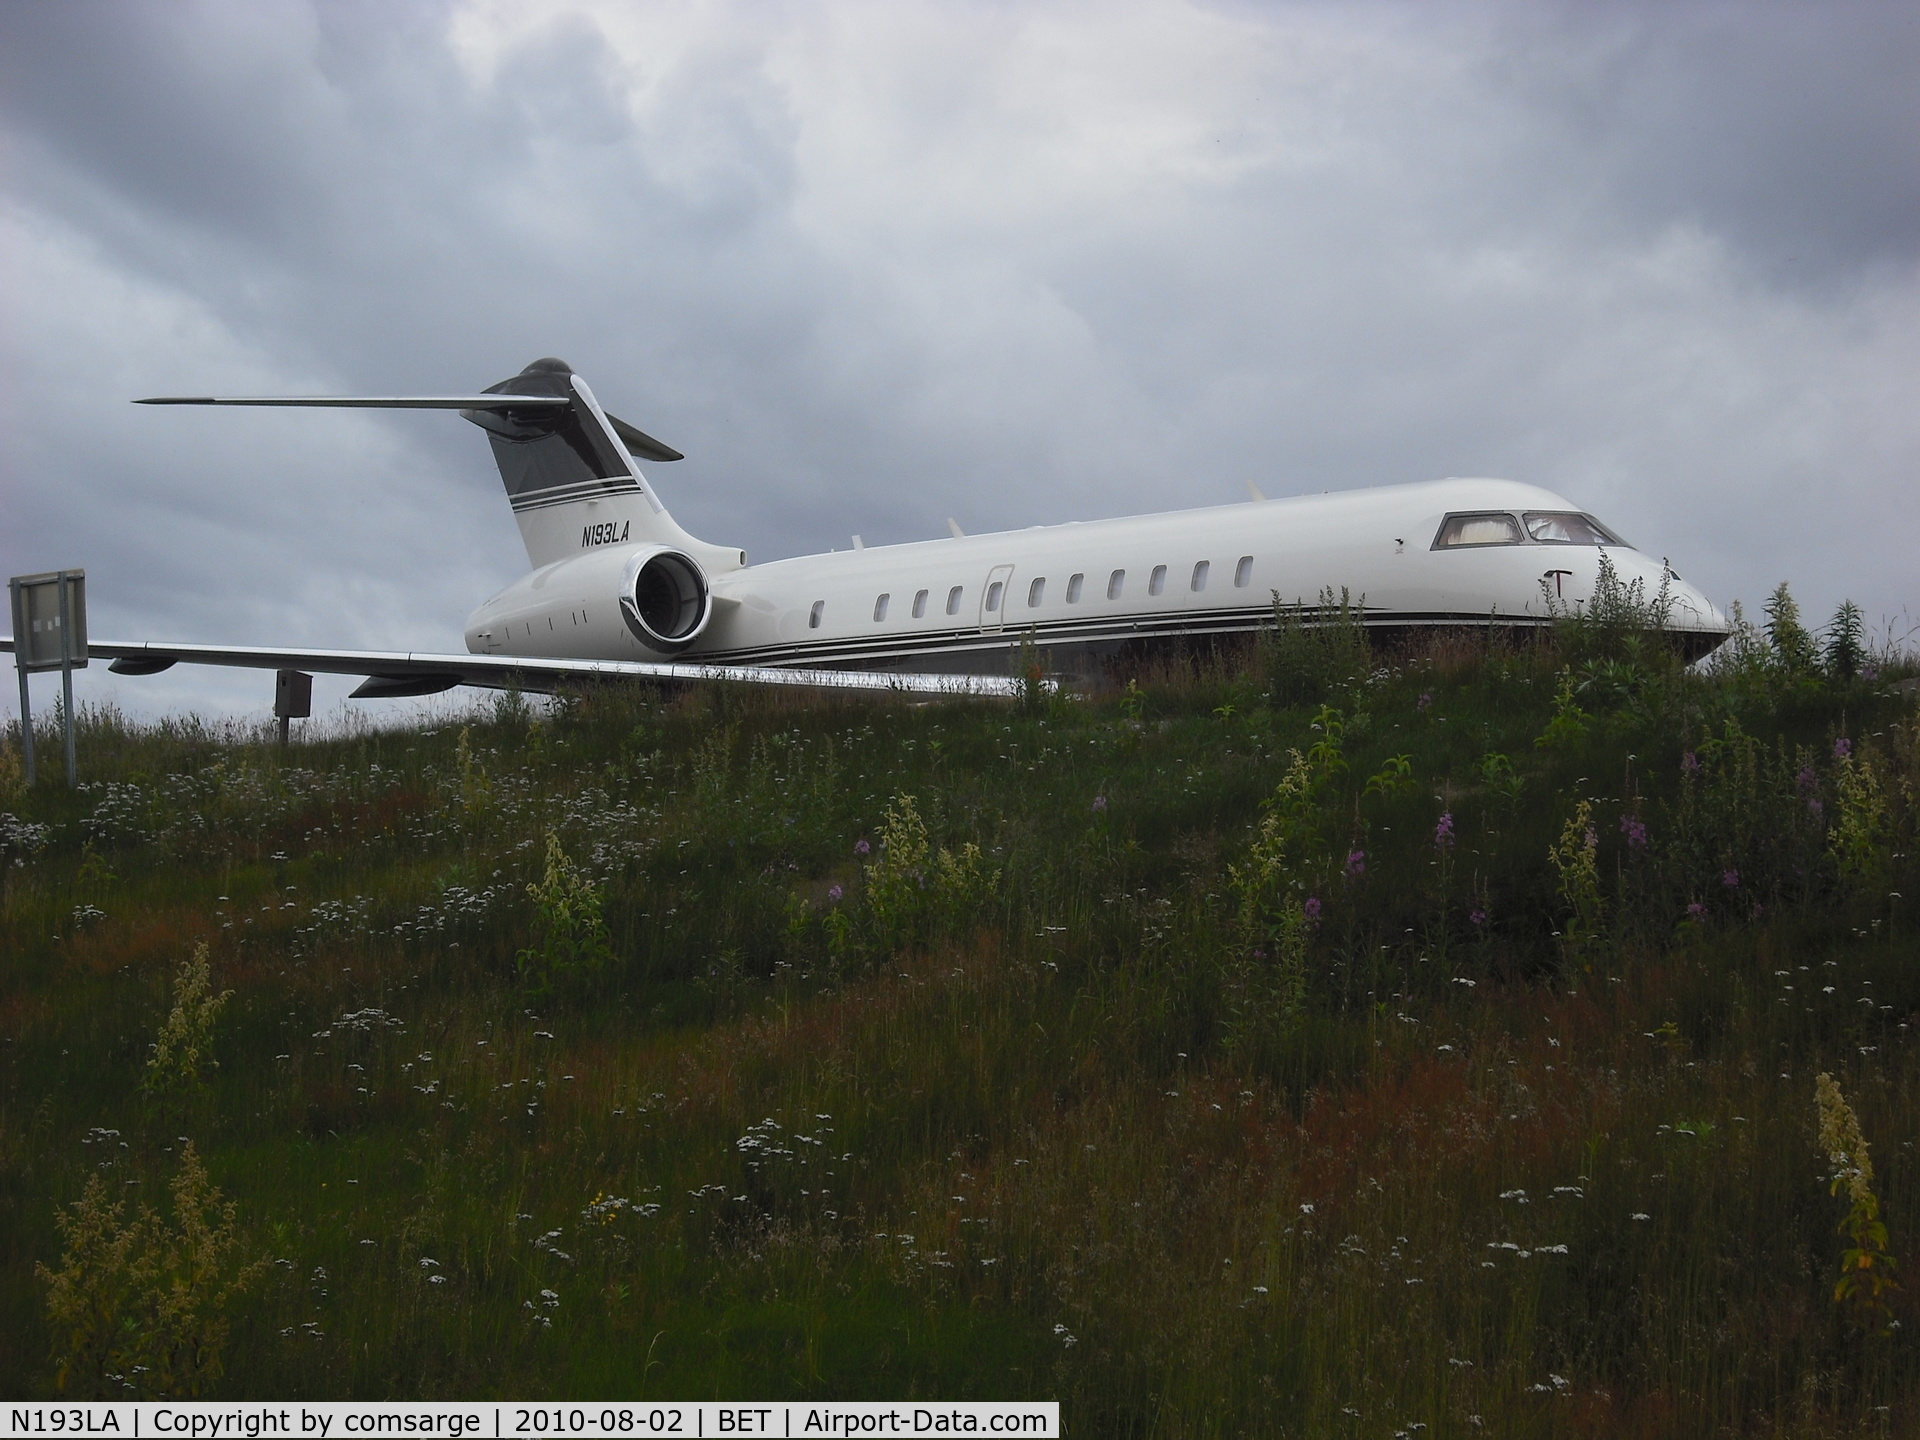 N193LA, 2007 Bombardier BD-700-1A11 Global 5000 C/N 9255, Parked in Bethel, AK.  Home to the 3rd busiest airport in Alaska.